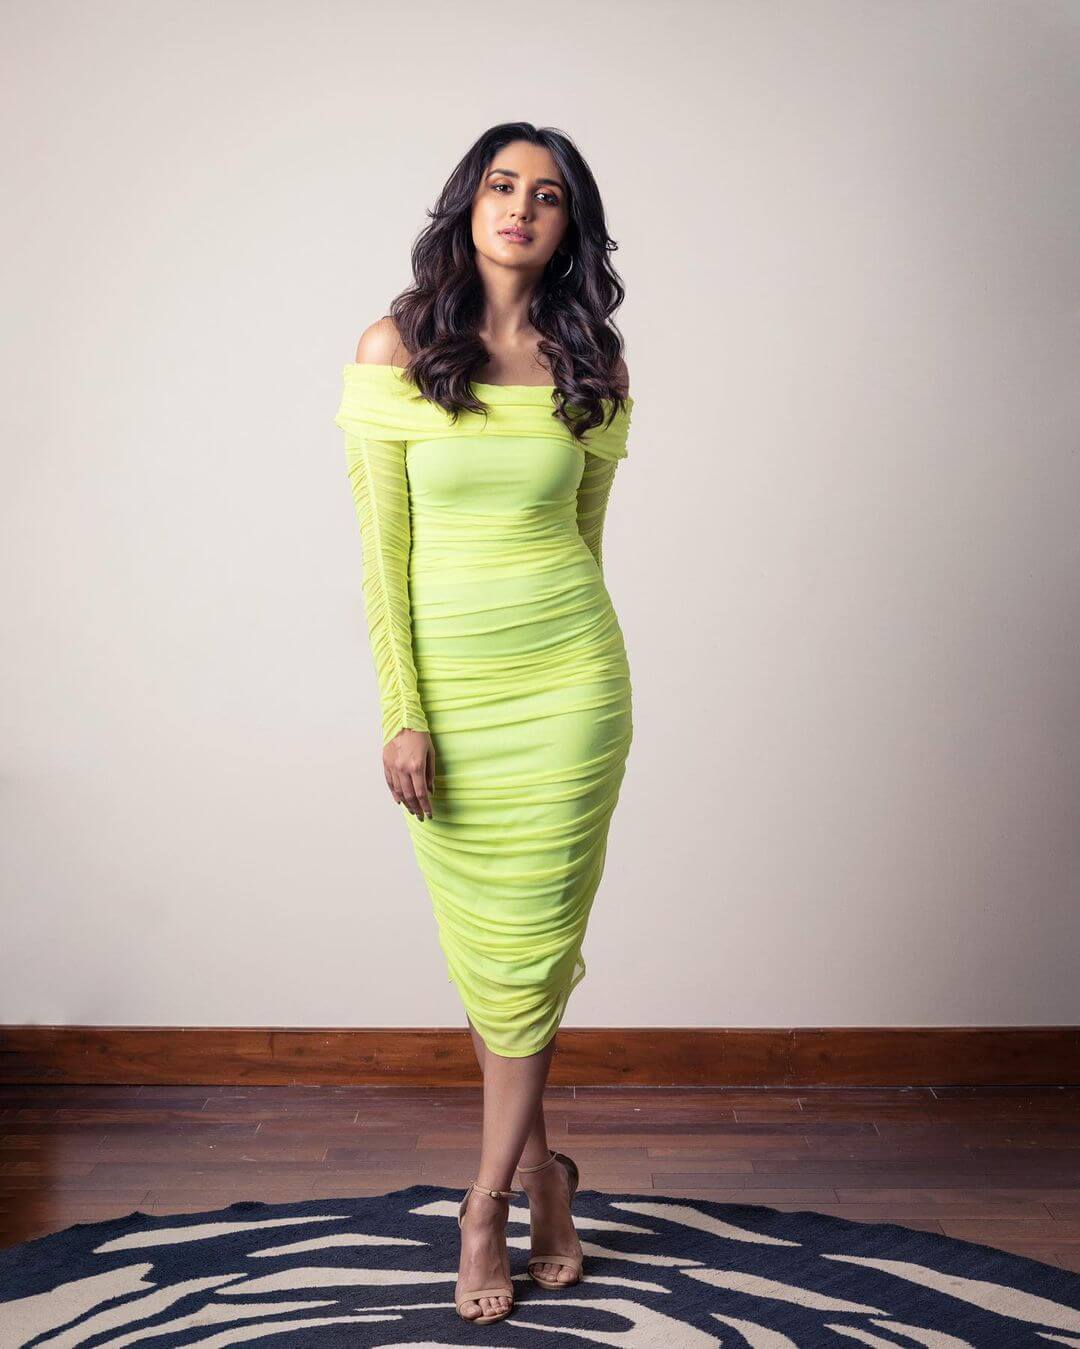 Nikita Dutta Look Fabulous In Neon Off-Shoulder Dress